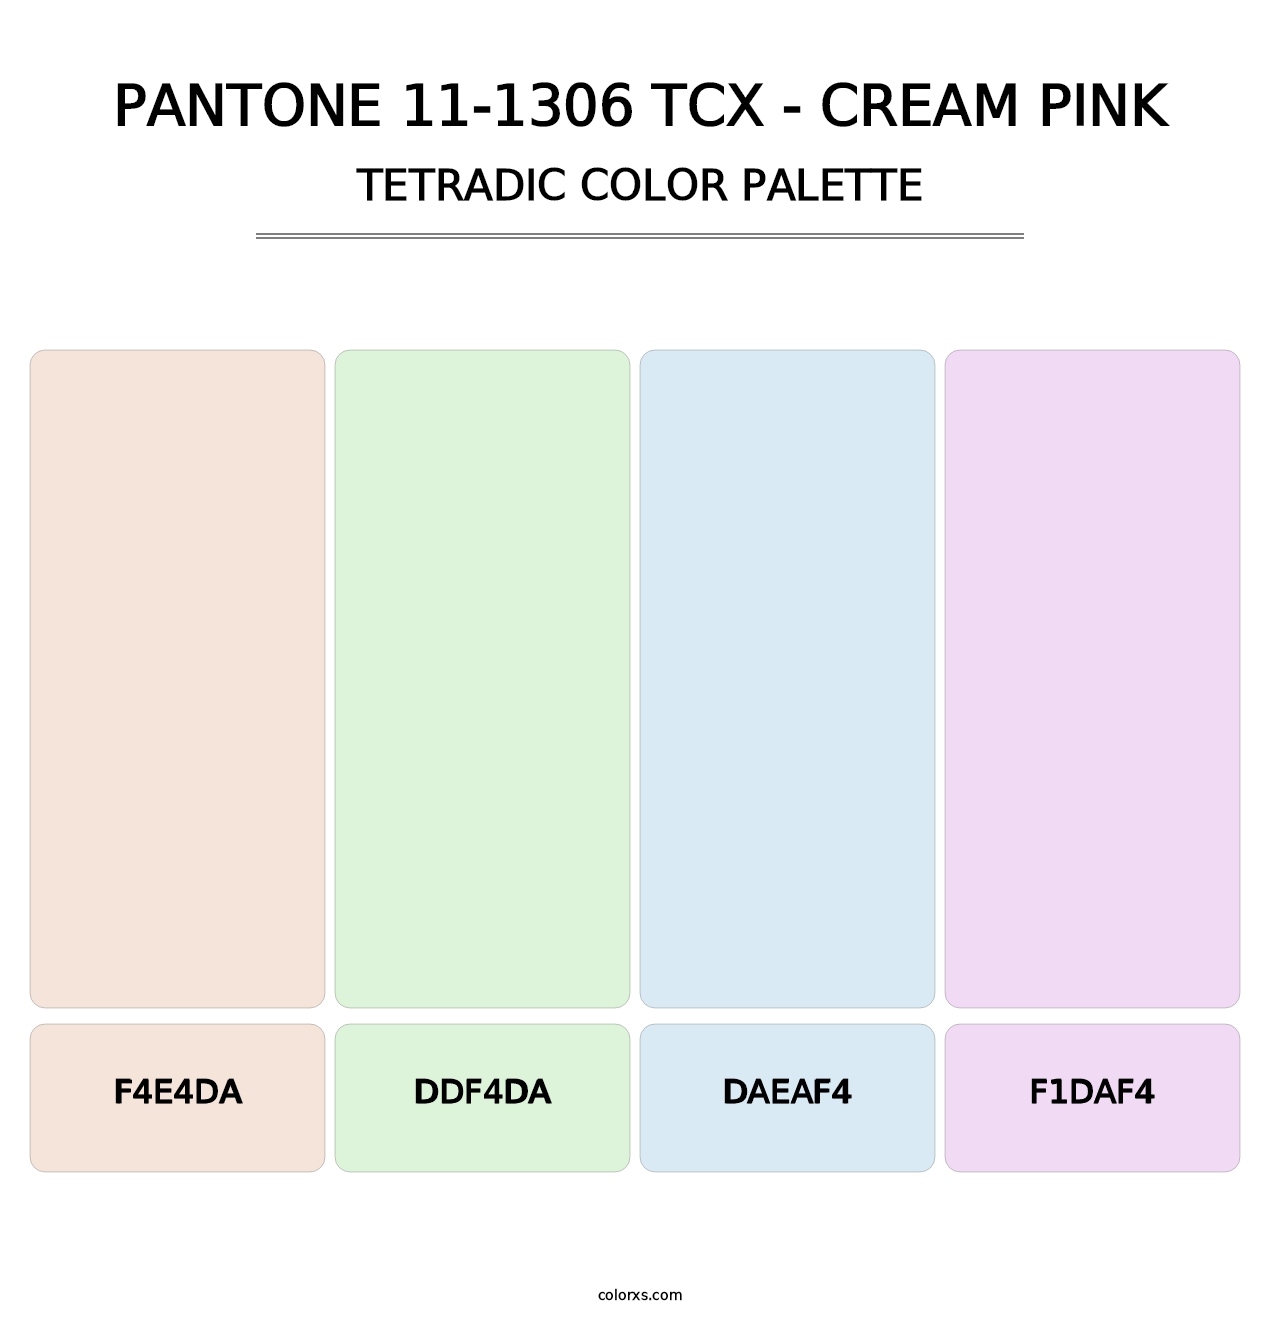 PANTONE 11-1306 TCX - Cream Pink - Tetradic Color Palette